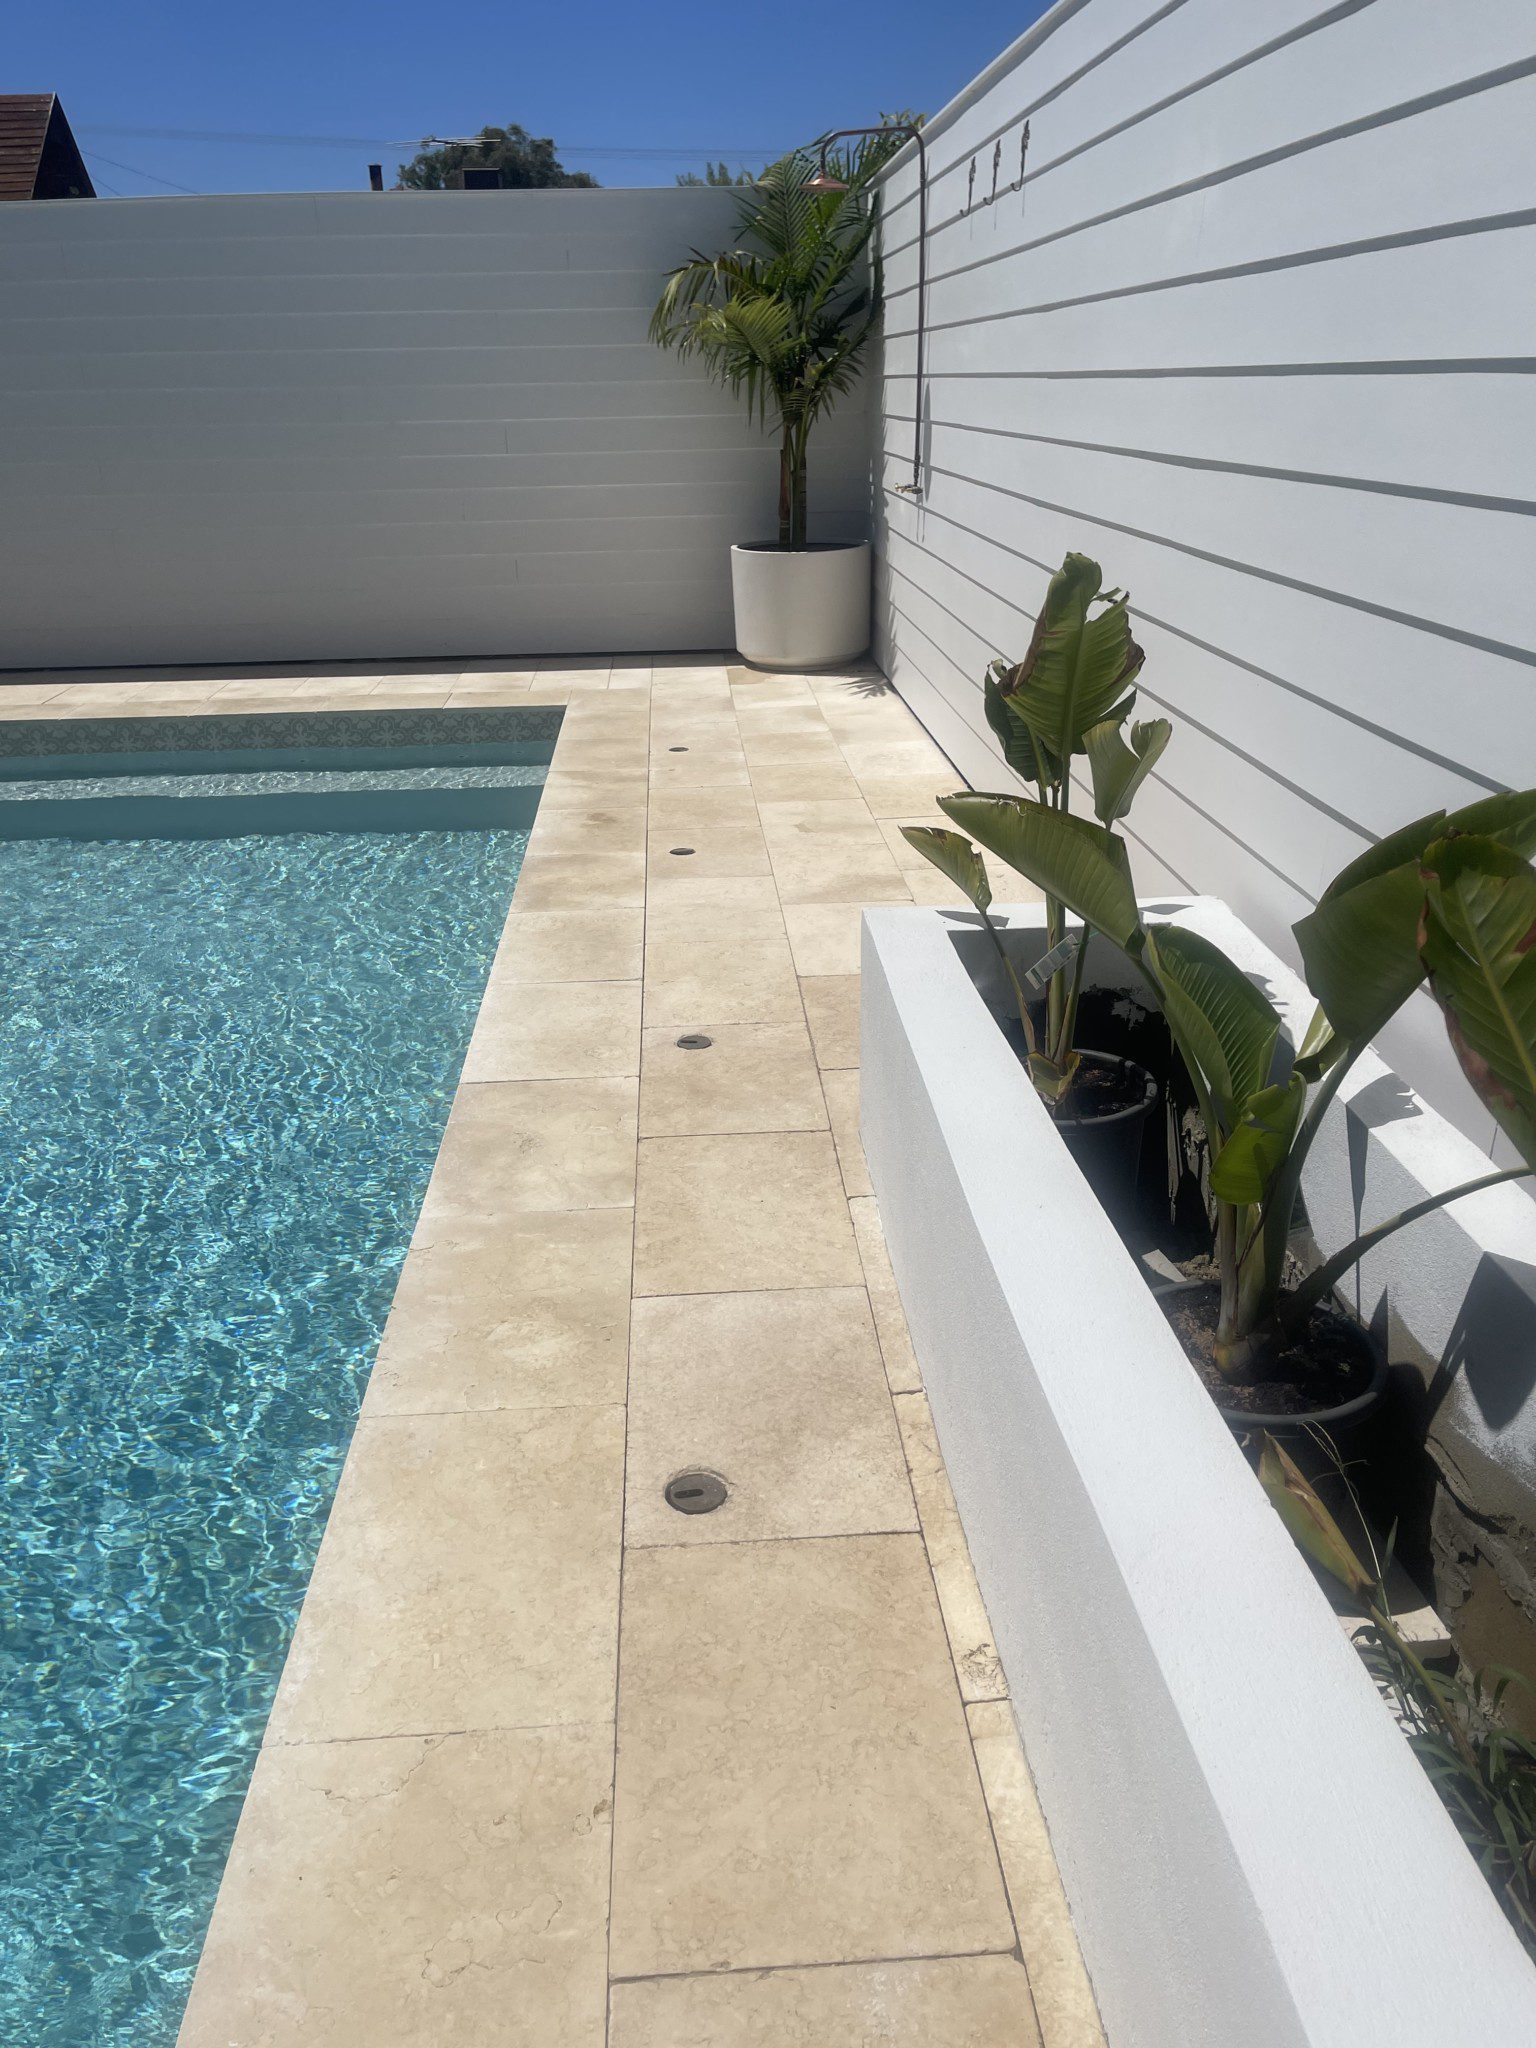 Coastal style beach house – pool area only